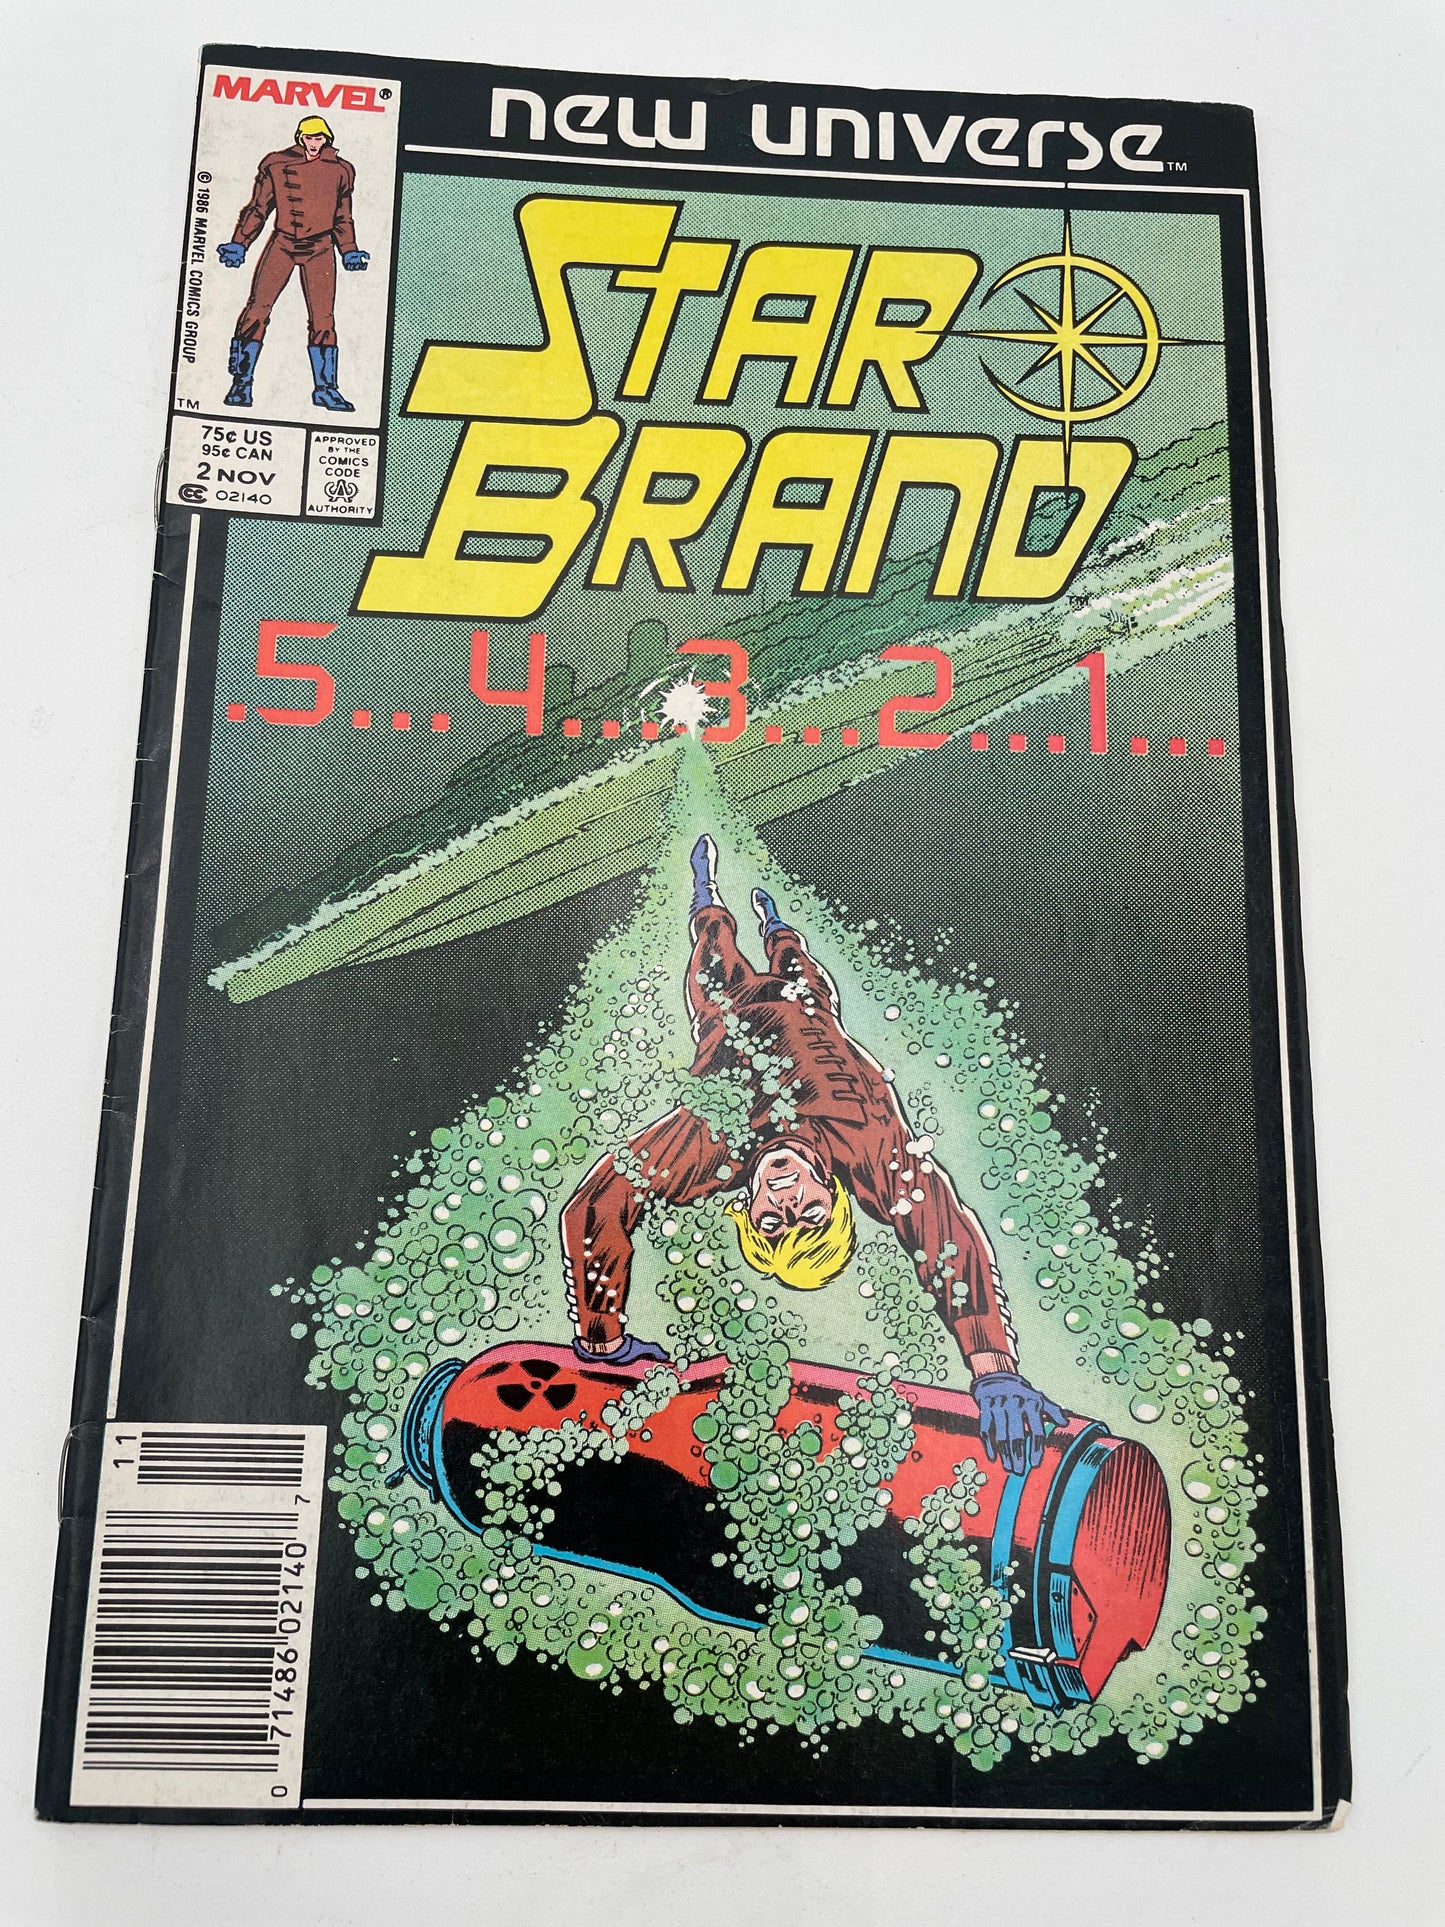 Marvel Comics - Star Brand #2 November 1986 #102297